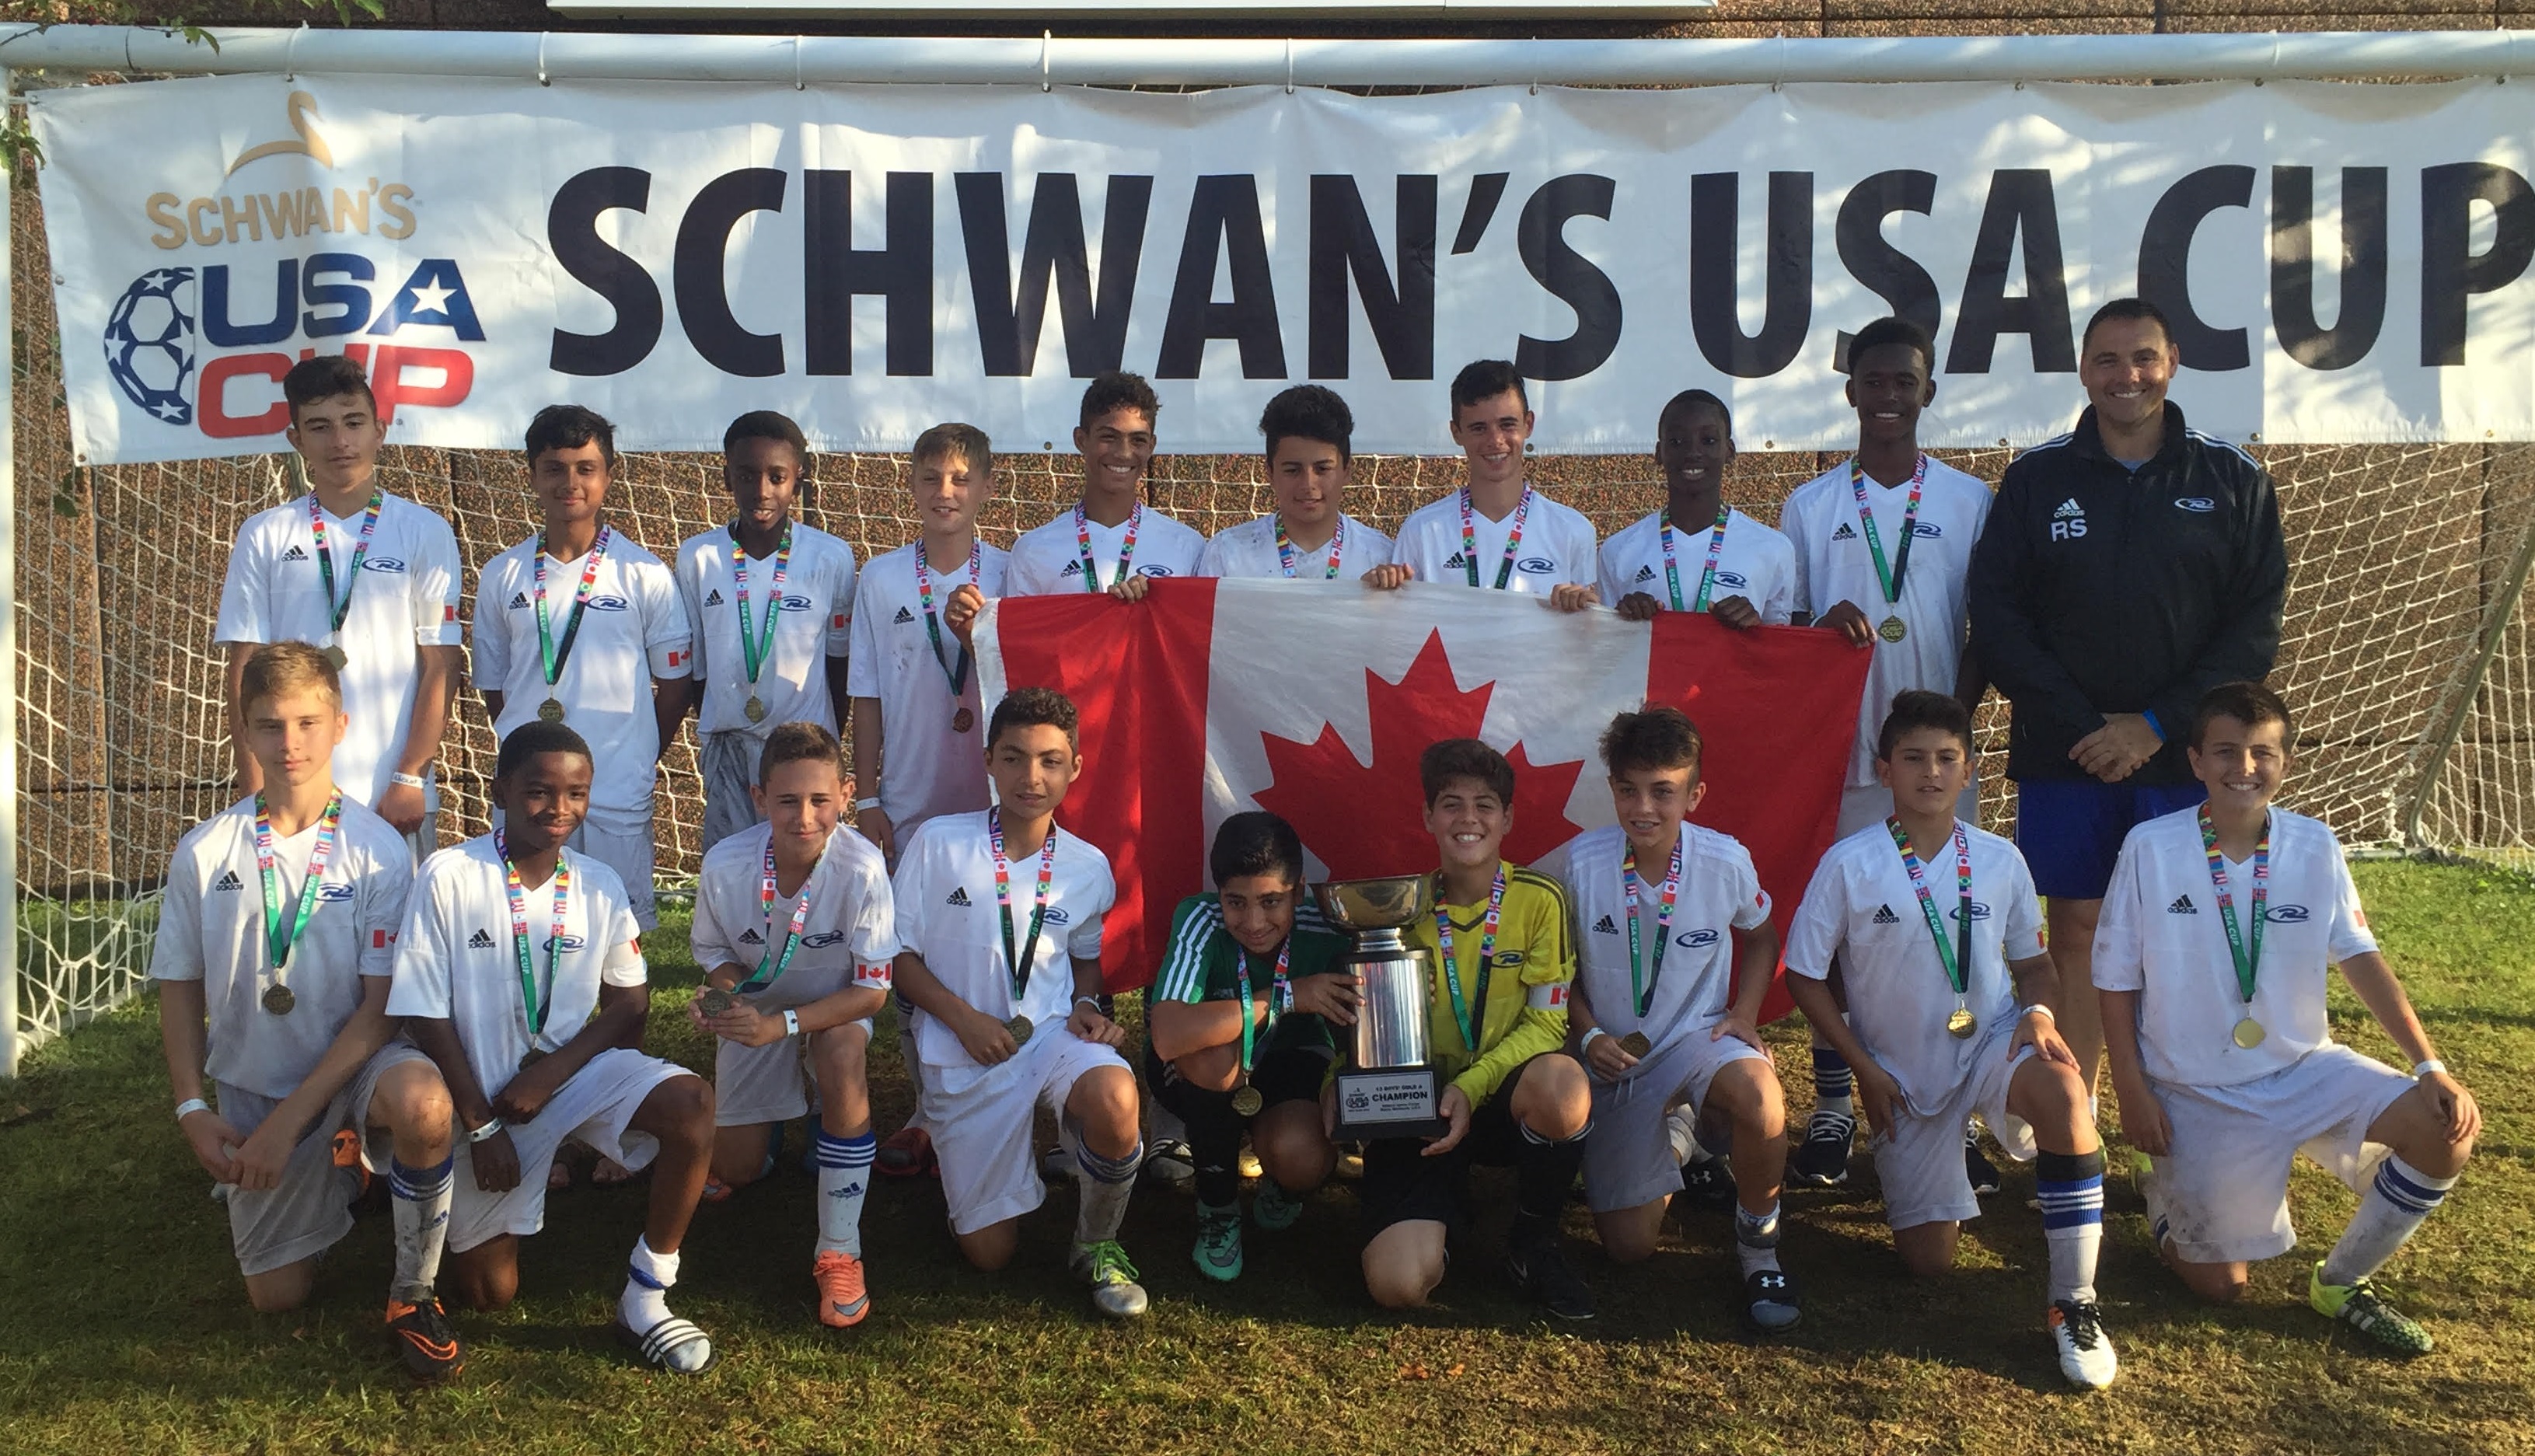 U13 Boys Win the International Schwan's USA Cup! Soccer Academy in